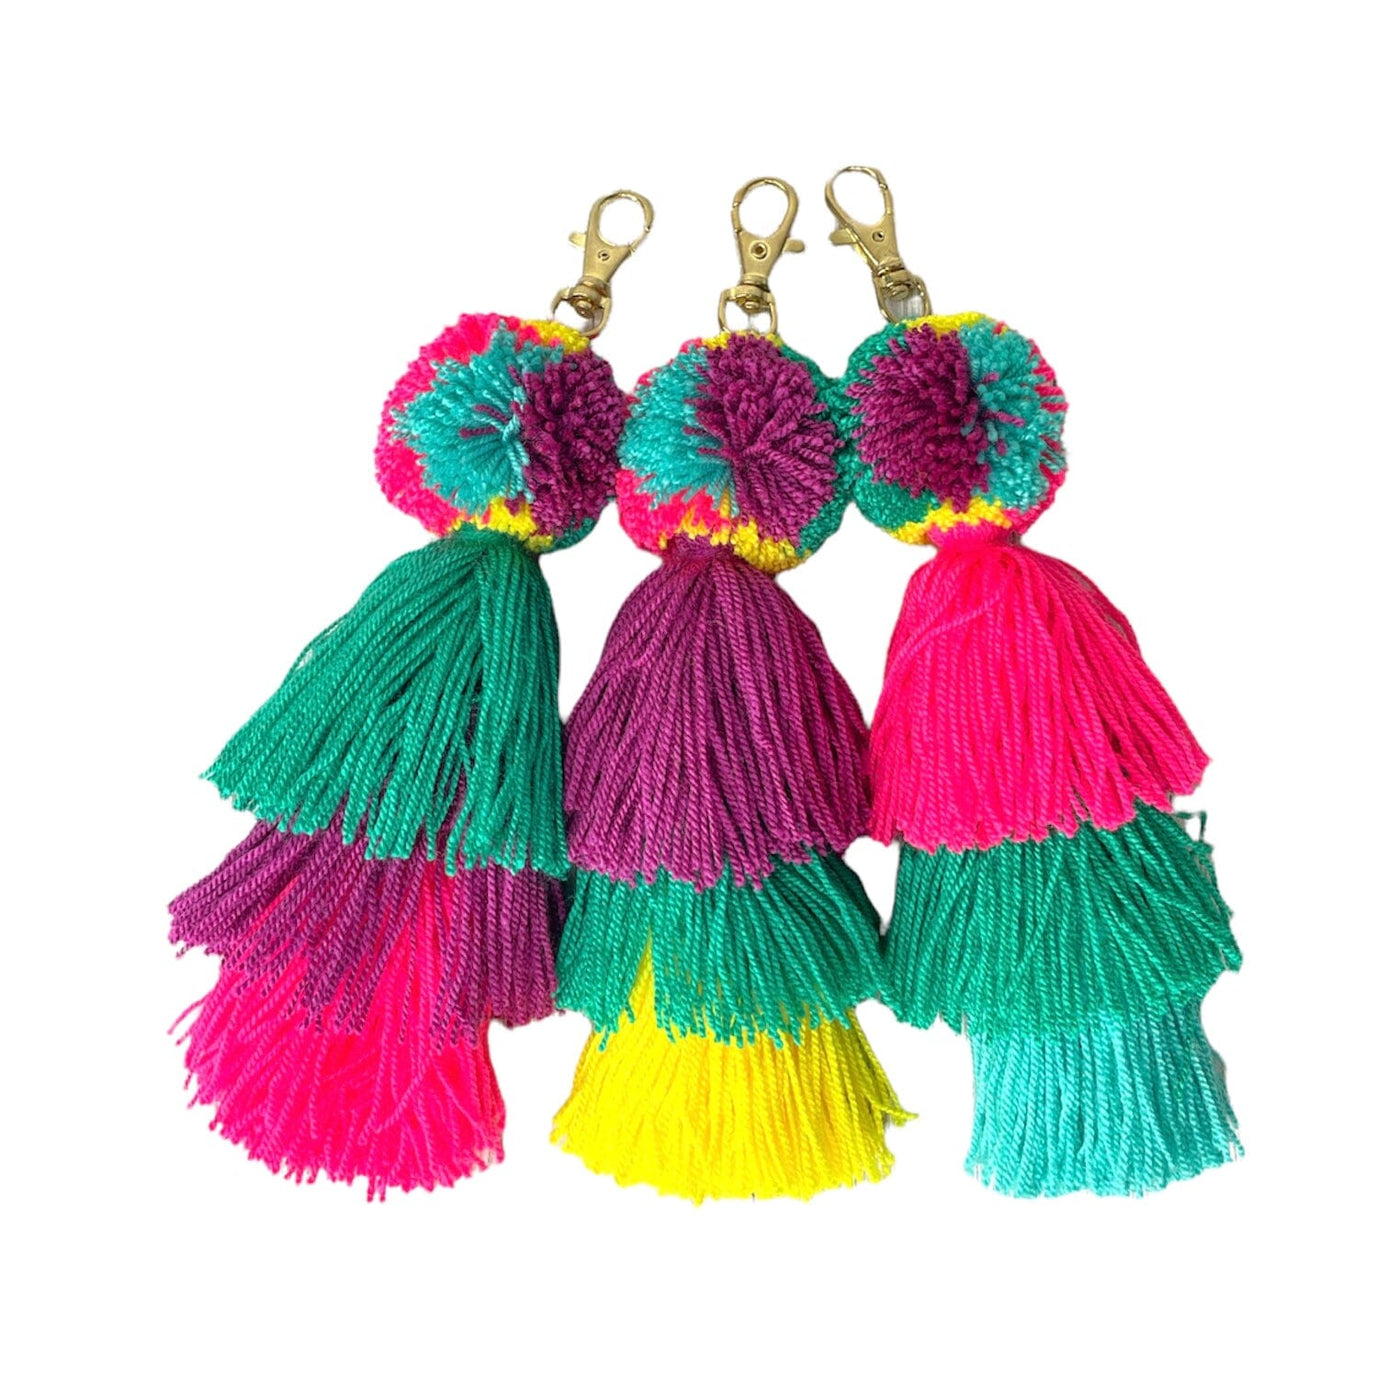 Summer Colors Tassel Bag Charms | Boho Pompom Charms | Purse Charm for summer | Colorful 4U